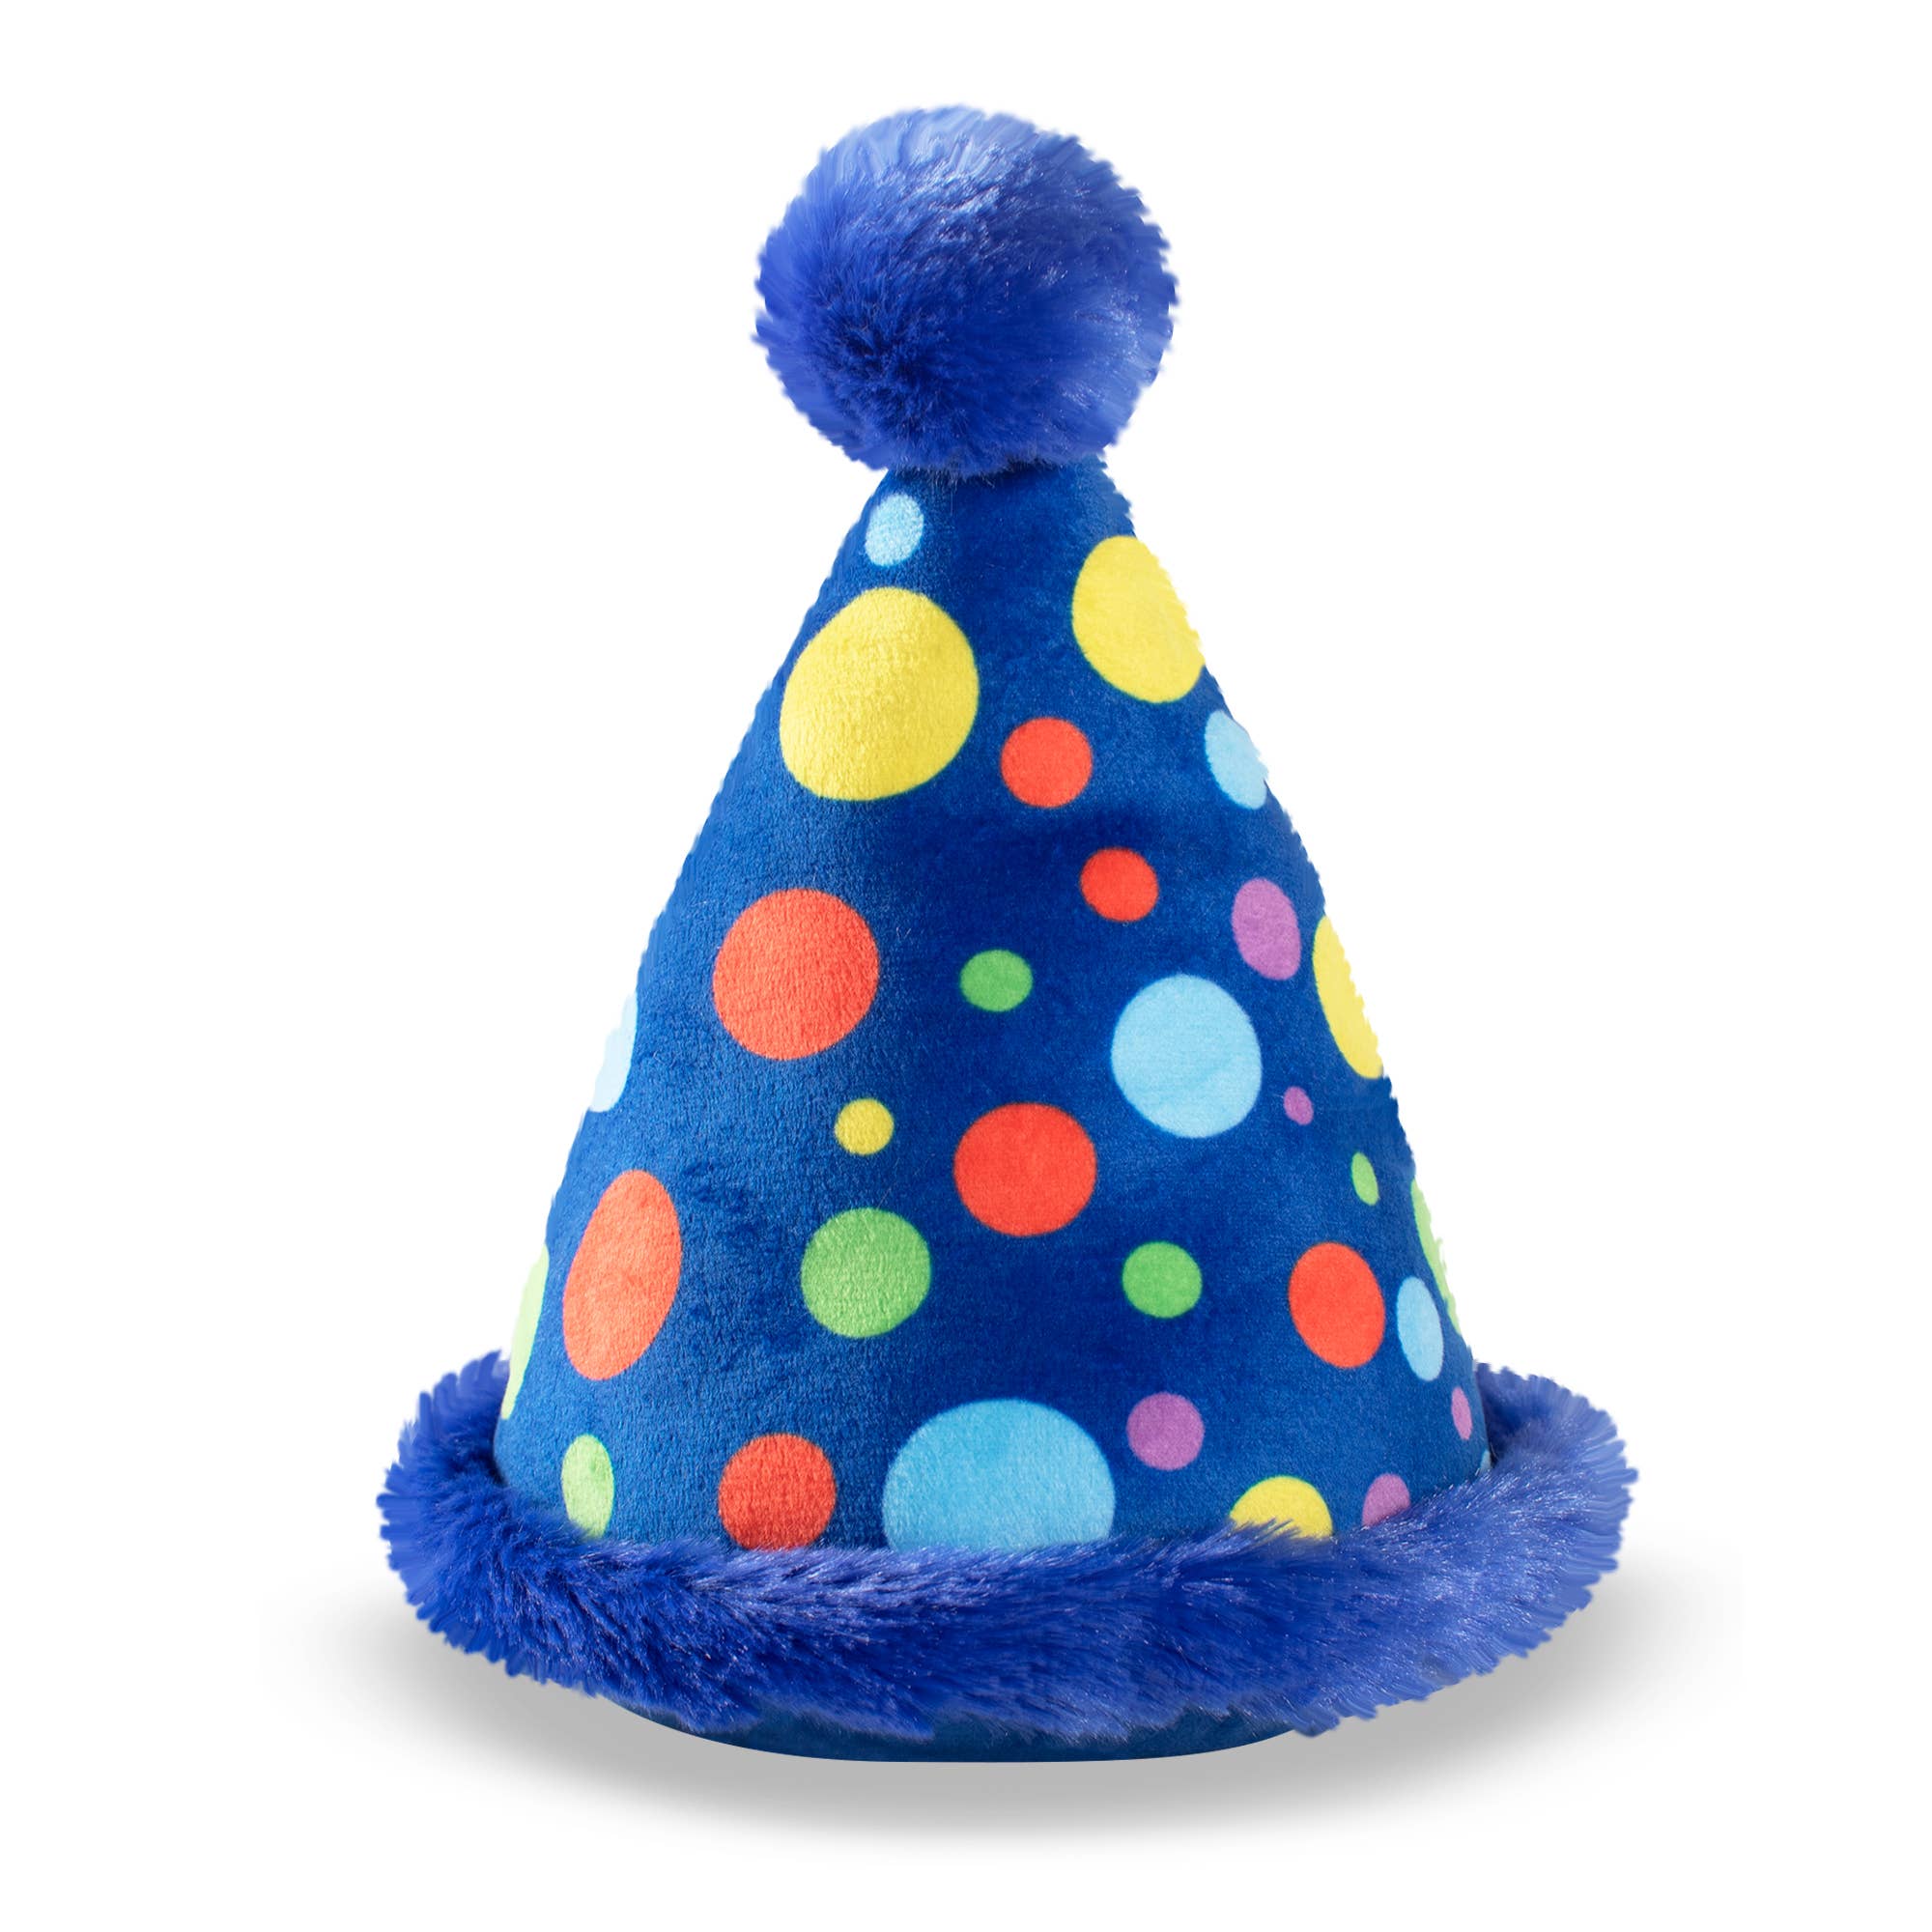 Plush Dog Toy - Party Hat